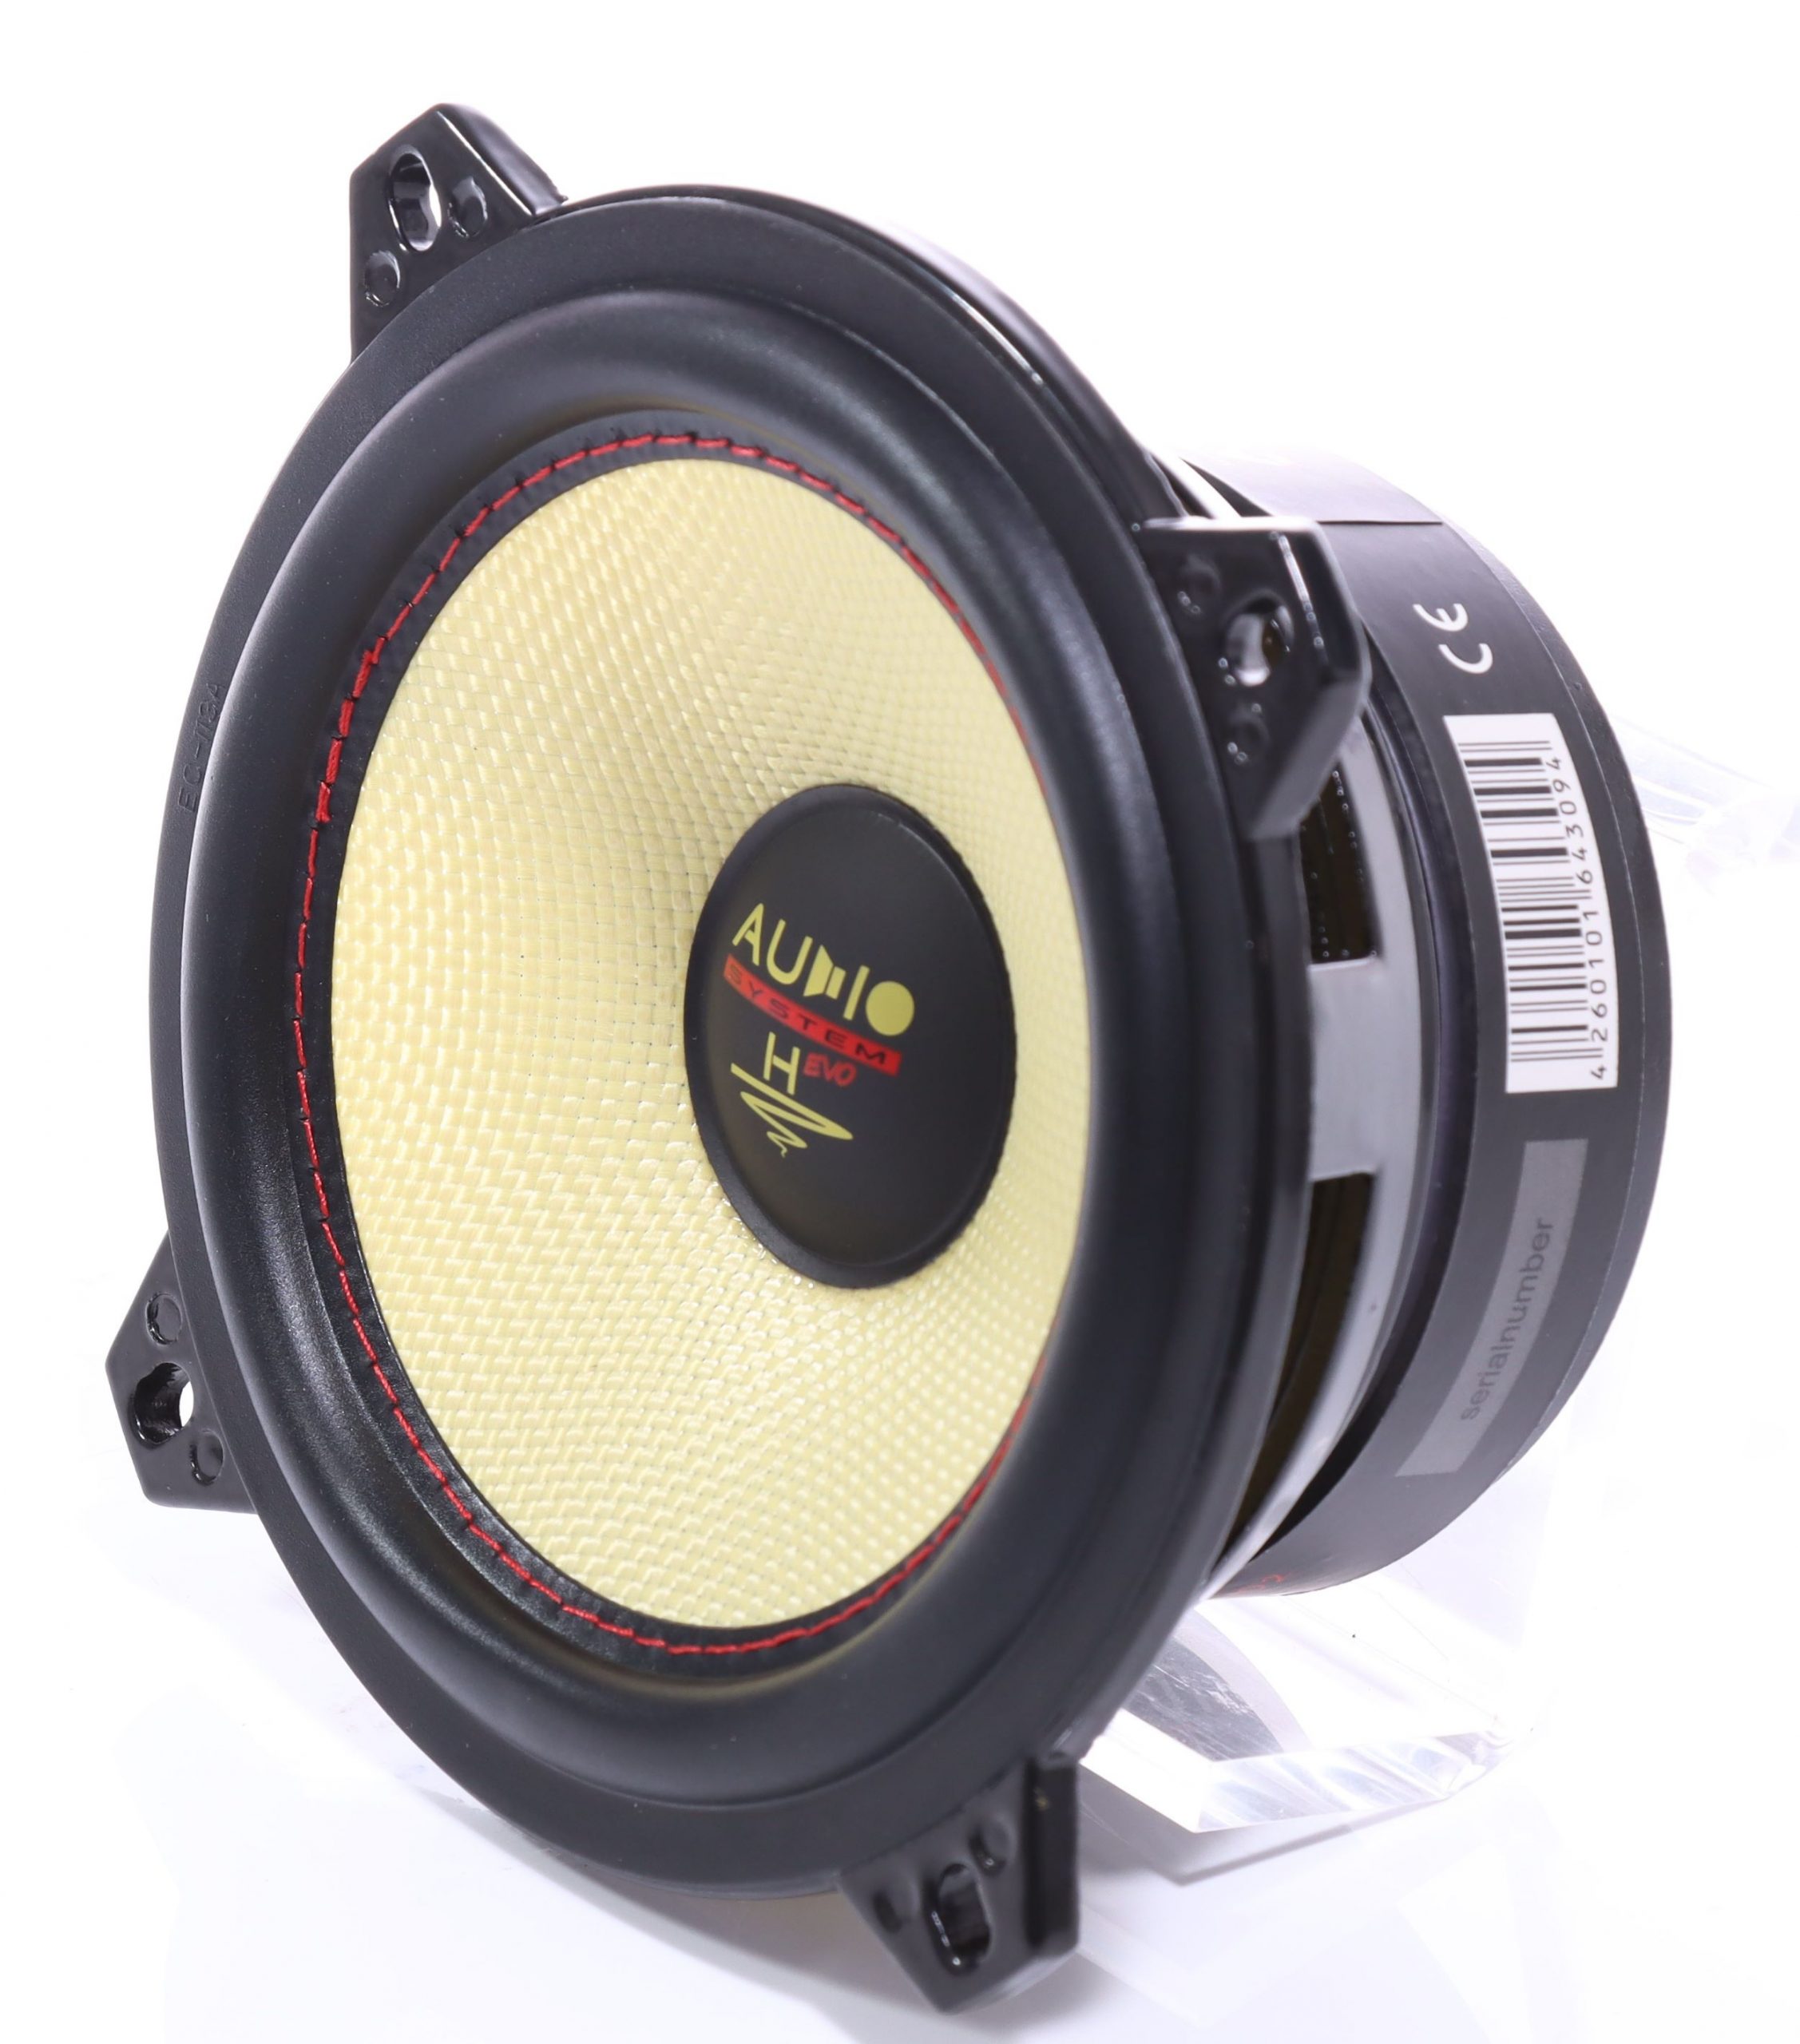 Audio System AX 130-2 EVO 2 Mitteltöner 13 cm (5.25") Kickbass Auto Lautsprecher Tieftöner 200 Watt - 1 Paar 